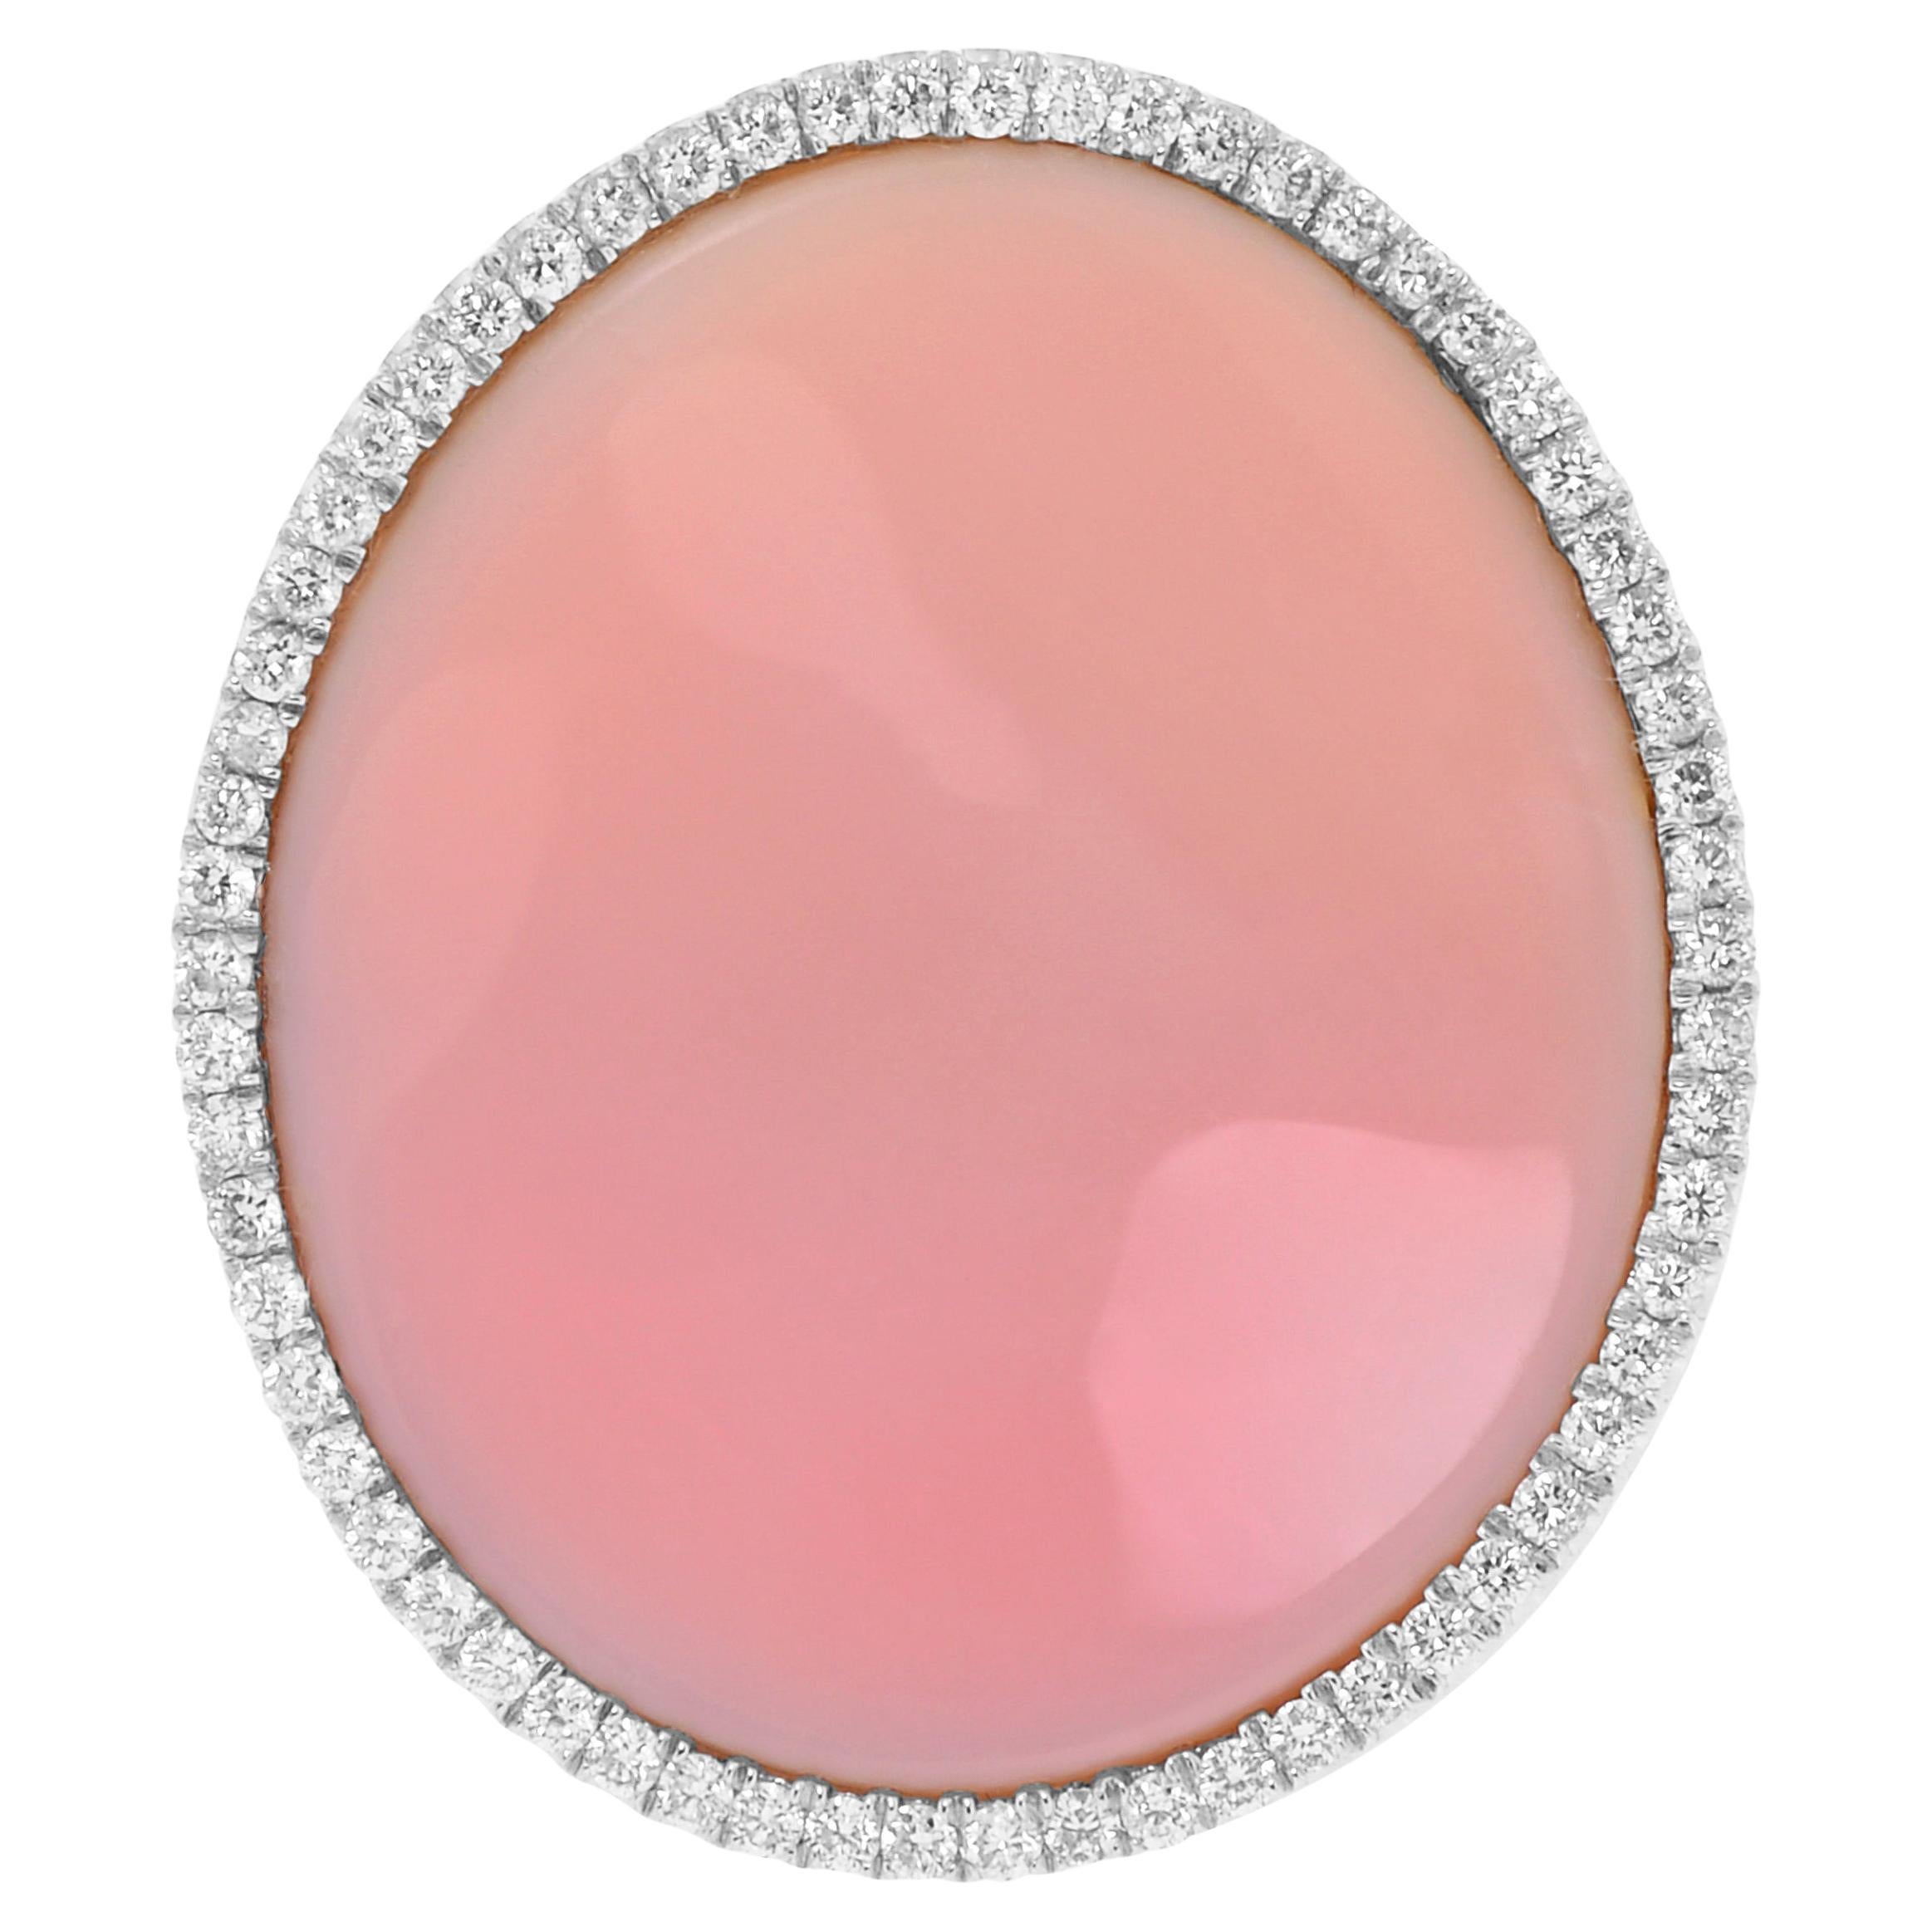 Mimi Milano, bague Aurora en or blanc 18 carats, MoPl, diamants, taille 6,25